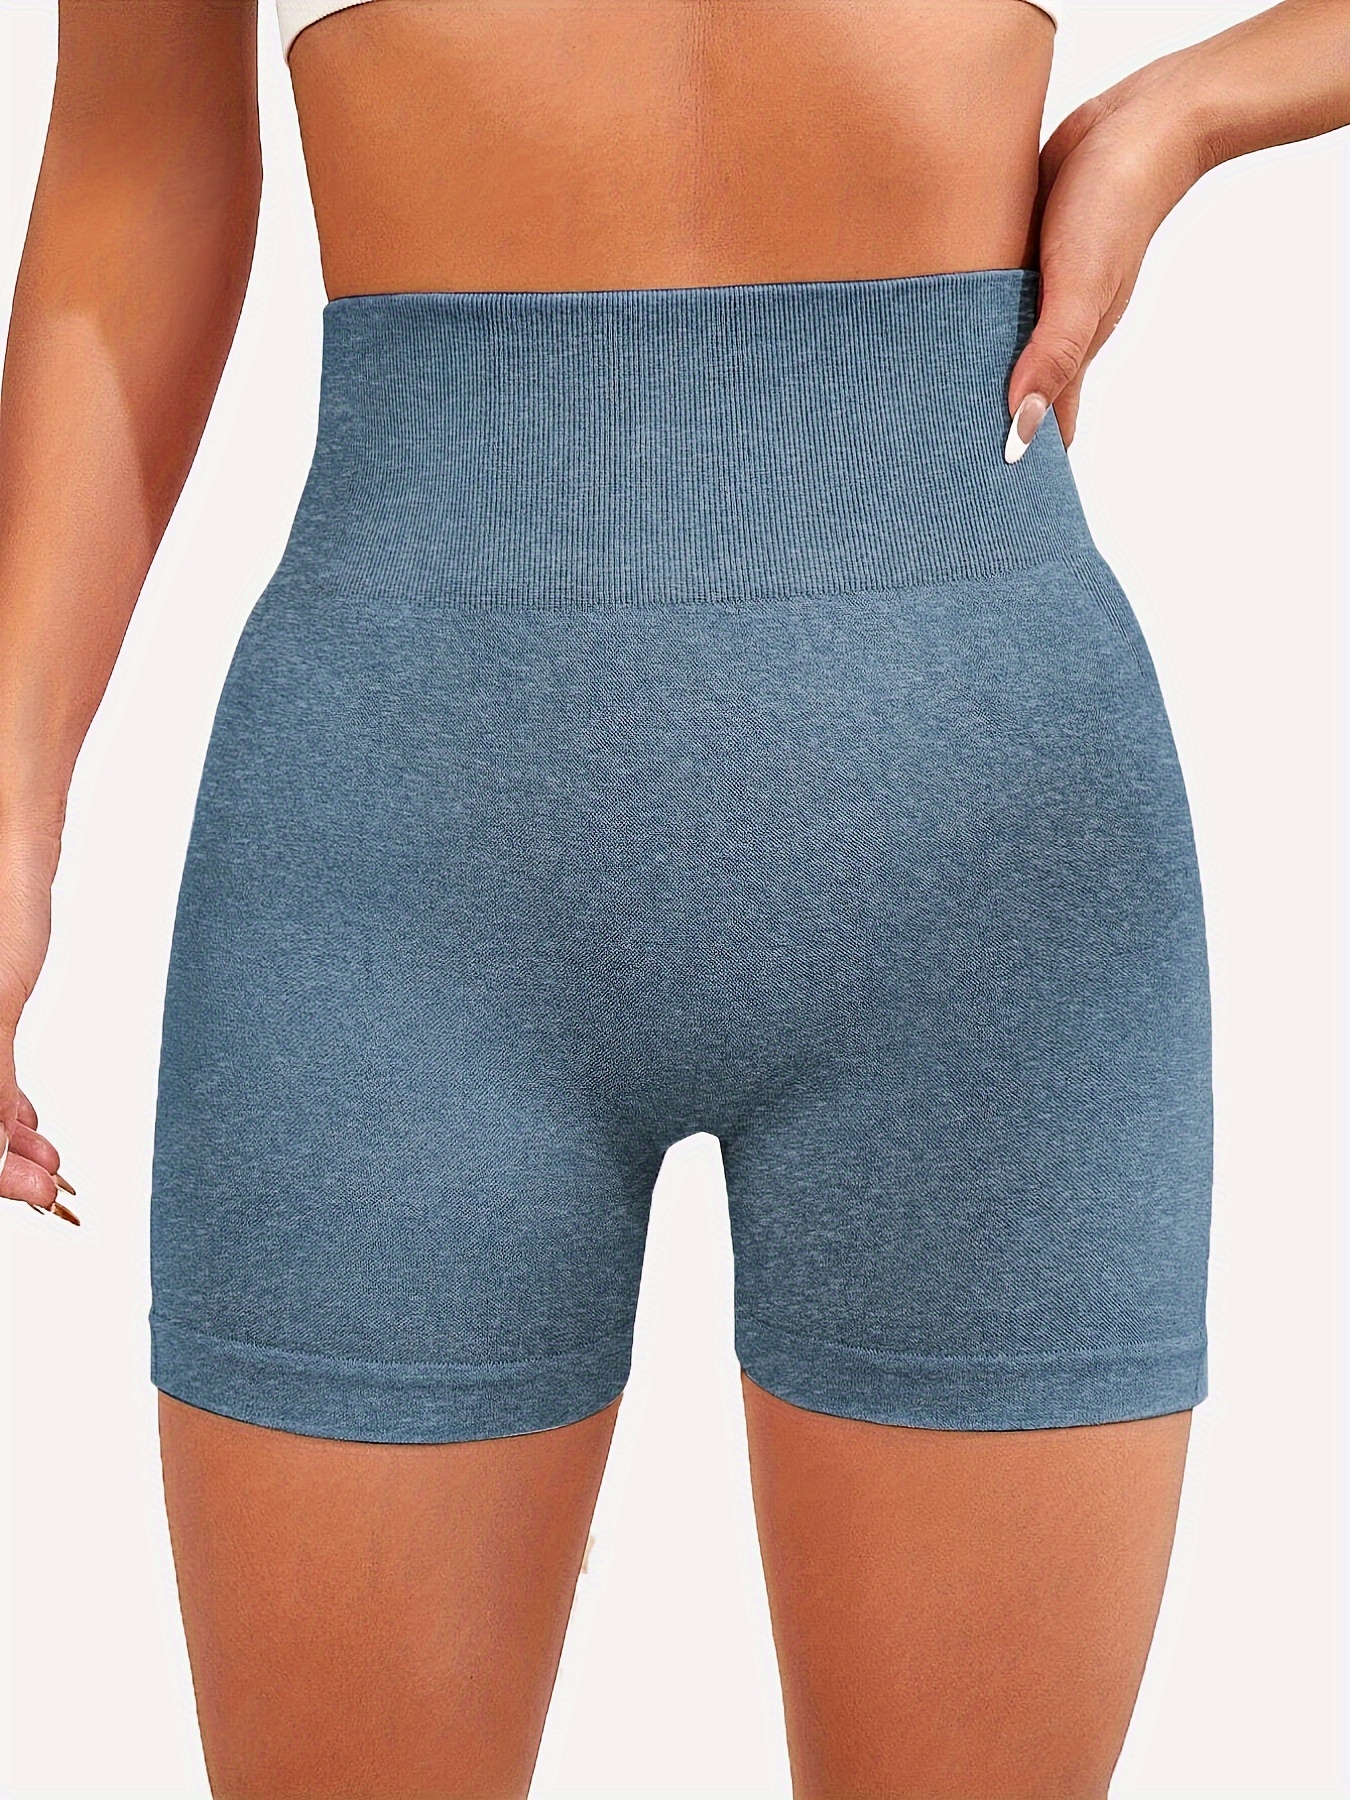 VOYJOY Tie Dye Biker Shorts for Women High Waist Seamless Shorts Workout  Yoga Leggings Scrunch Butt Lift Gym Pants, #0 Tie Dye Dark Blue, XS price  in Saudi Arabia